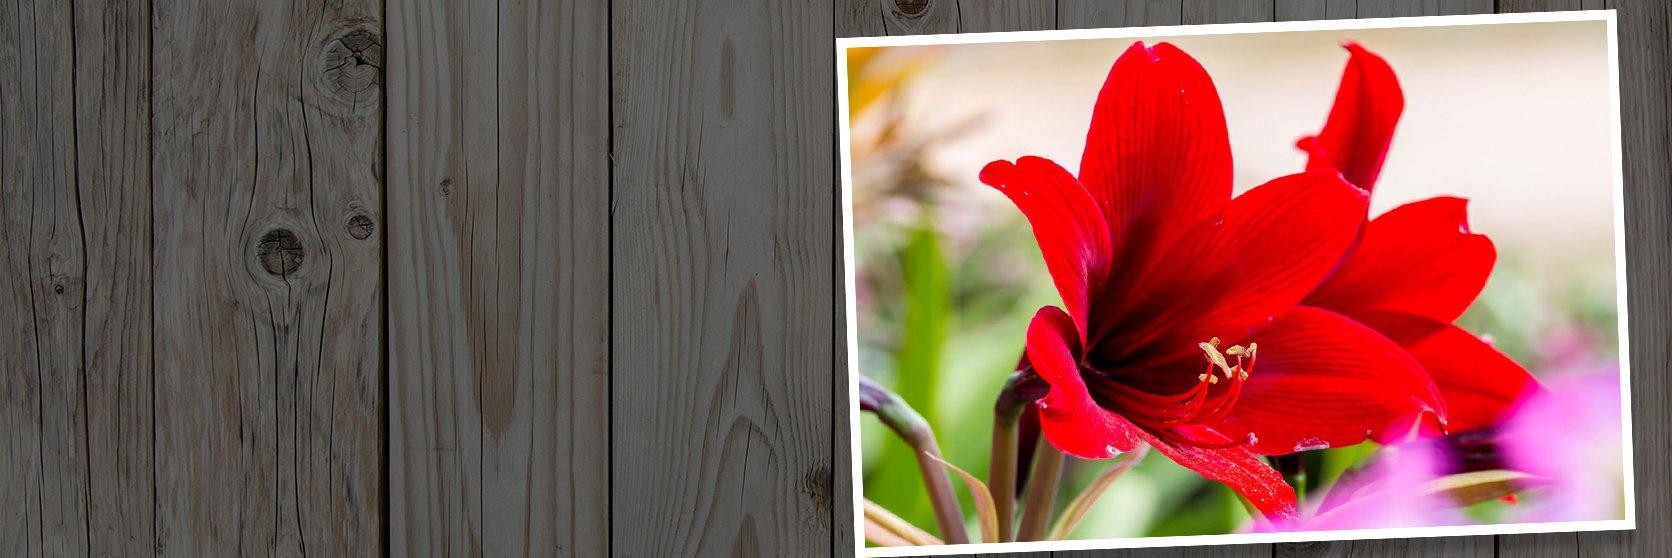 Amaryllis-red-flower